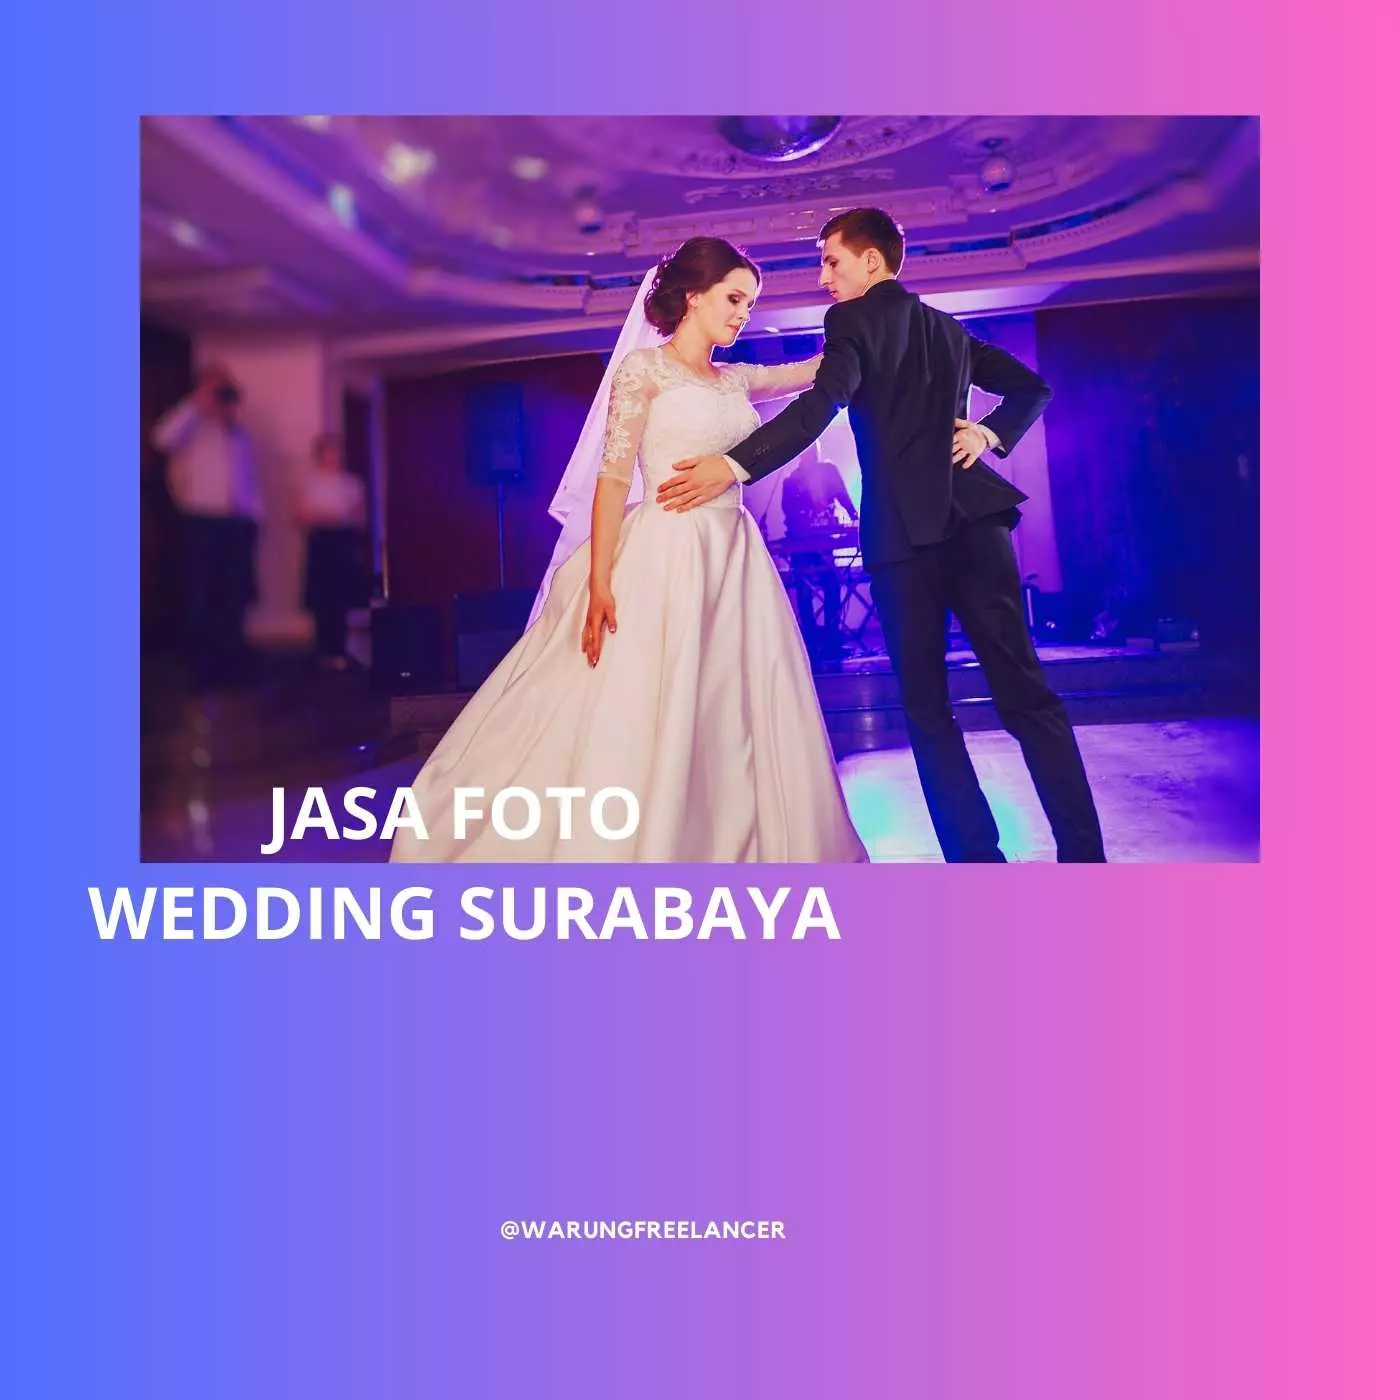 Surabaya Wedding Photo Services